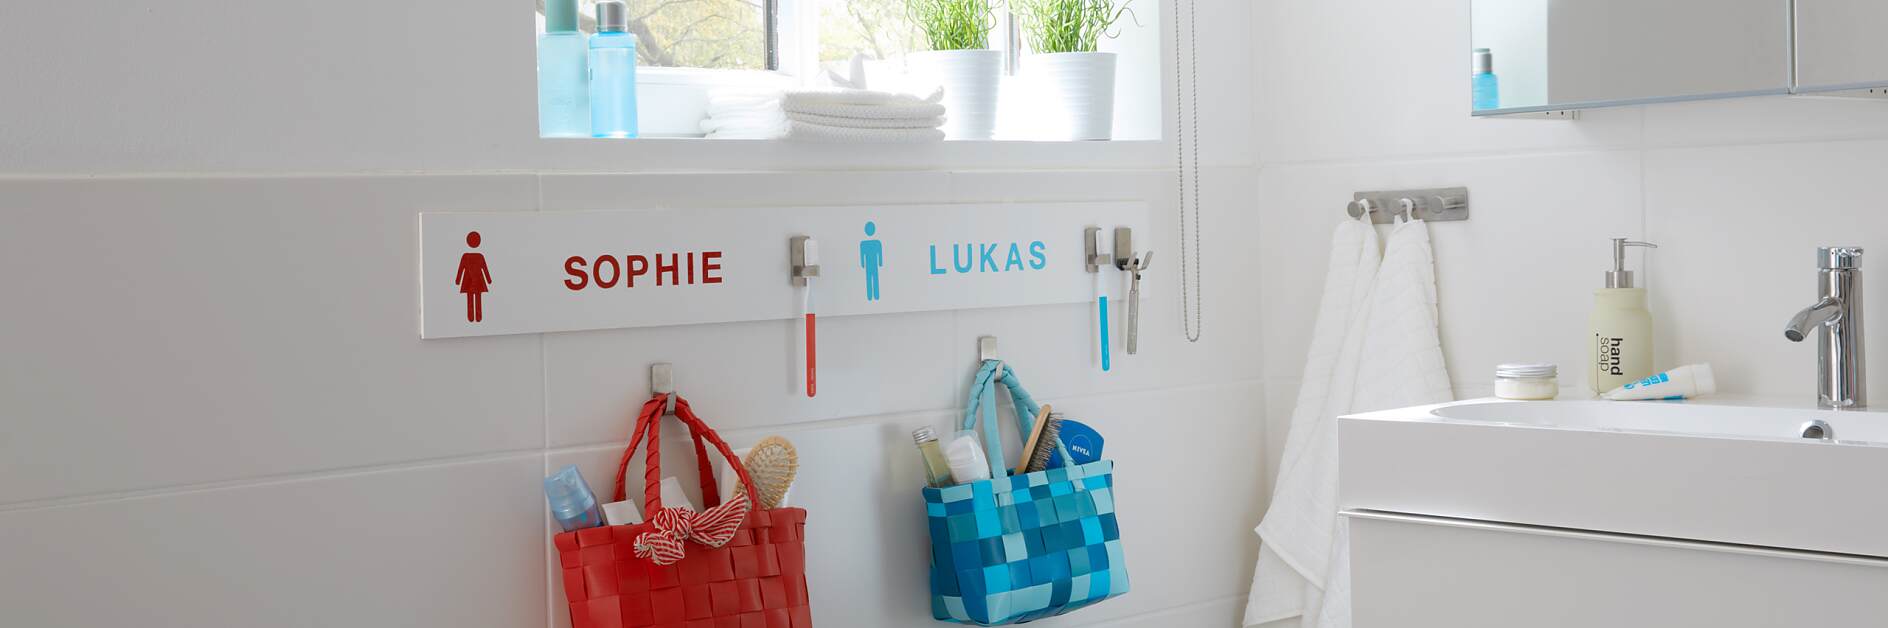 Decorative bathroom hook rack: To each his own